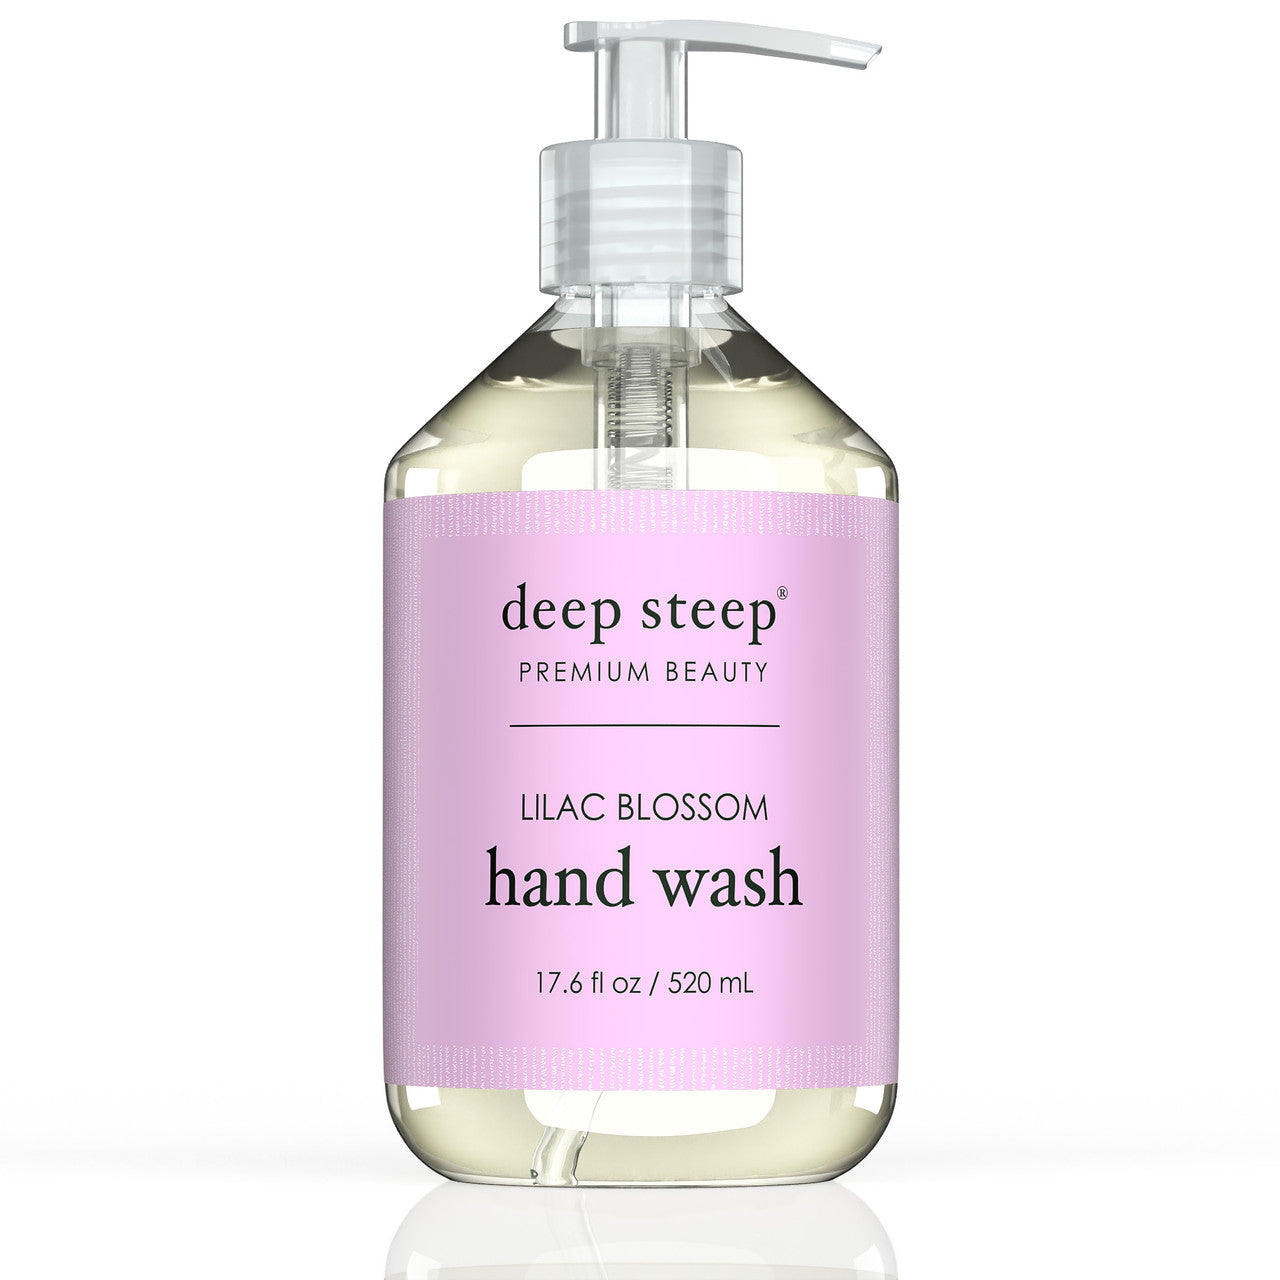 Argan Oil Hand Wash Lilac Blossom 17.6oz. - Front